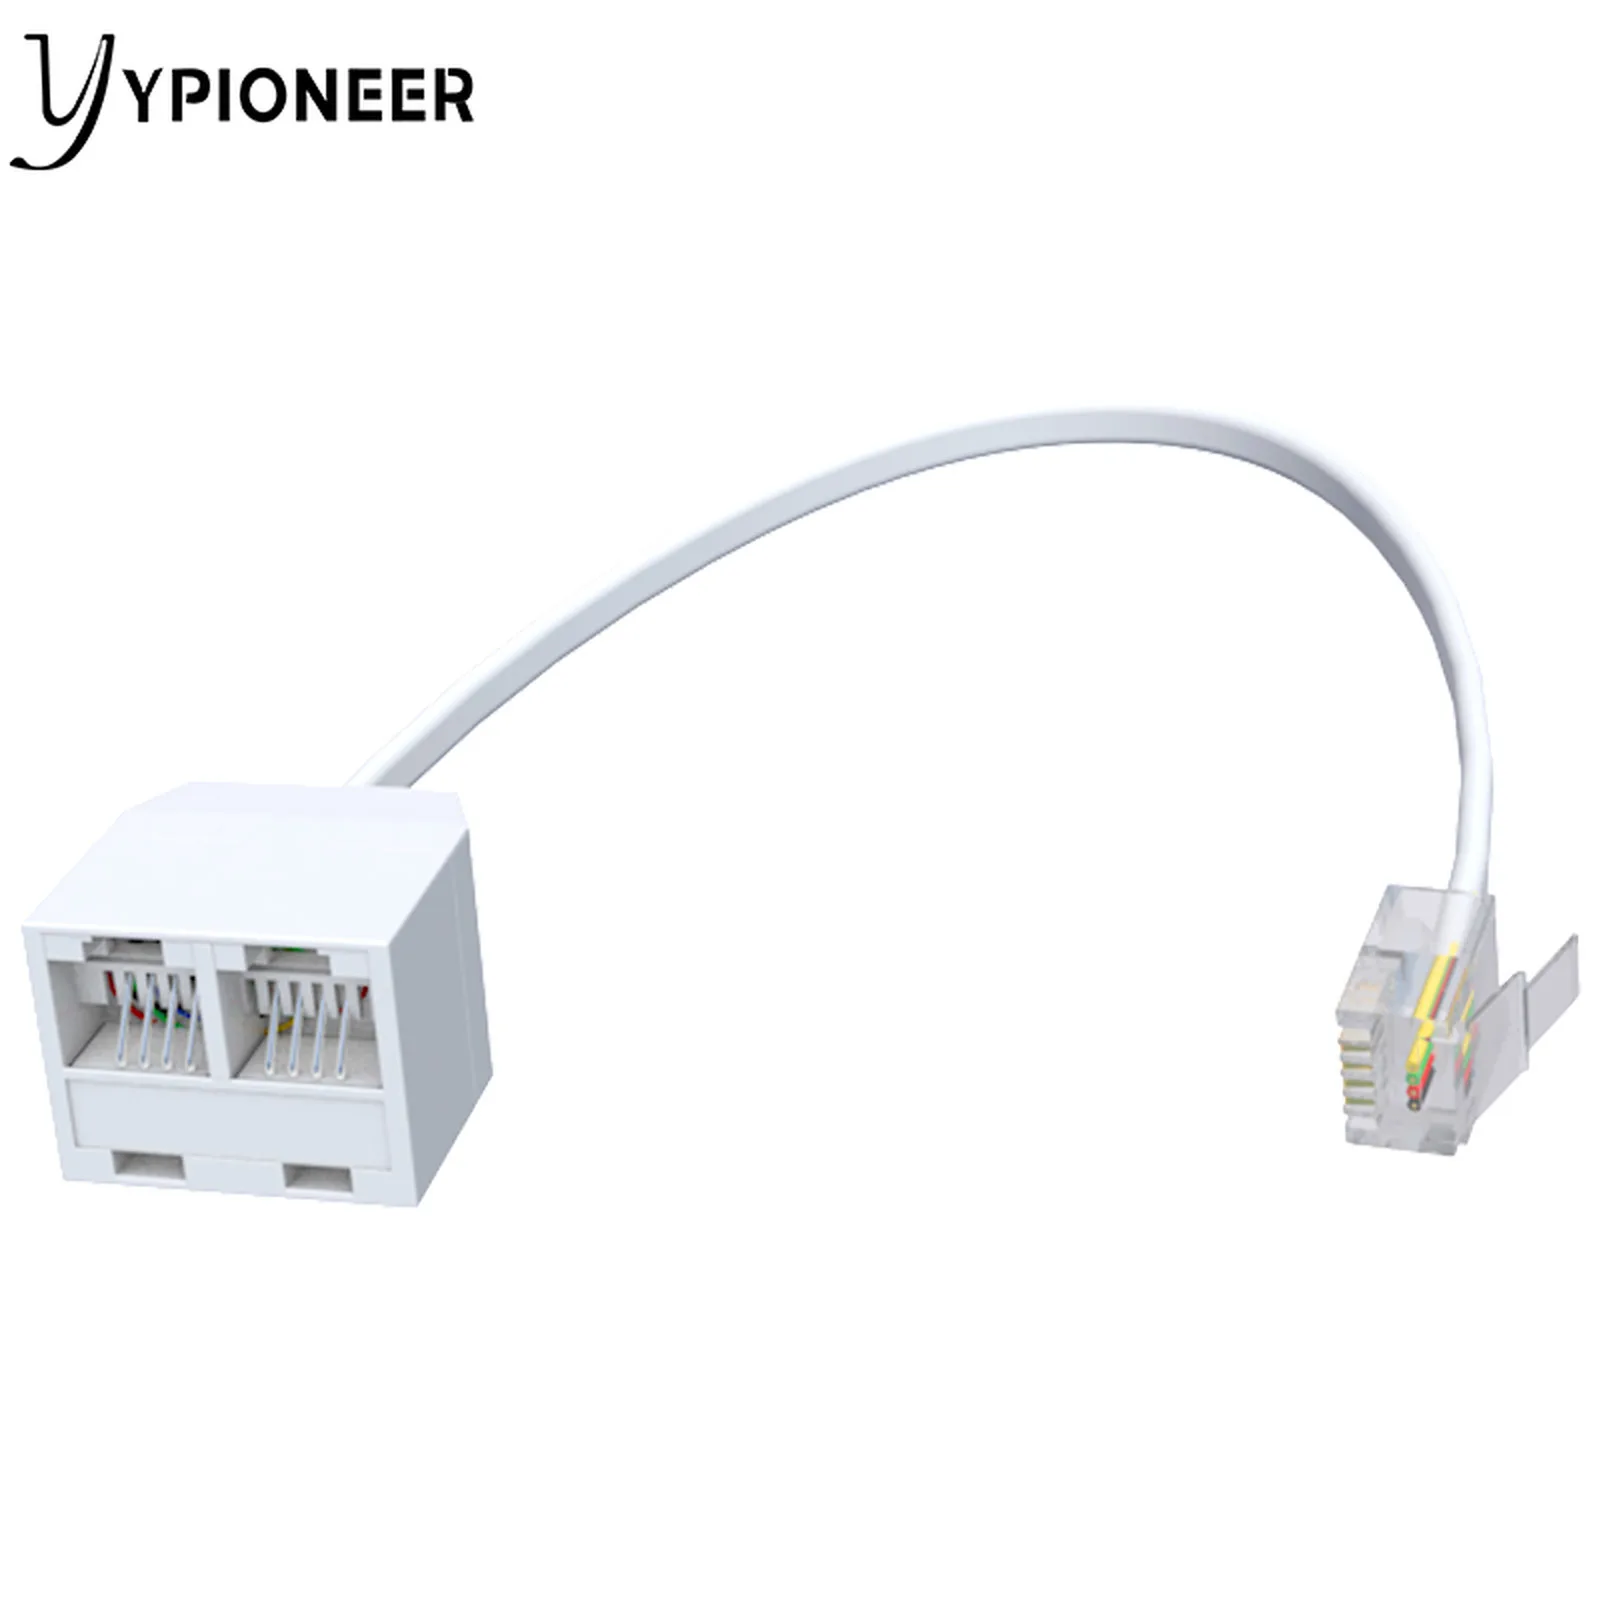 YPioneer T10023 White Telephone Splitter RJ11 6P4C 1 Male to 2 Female Adapter RJ11 to RJ11 Separator